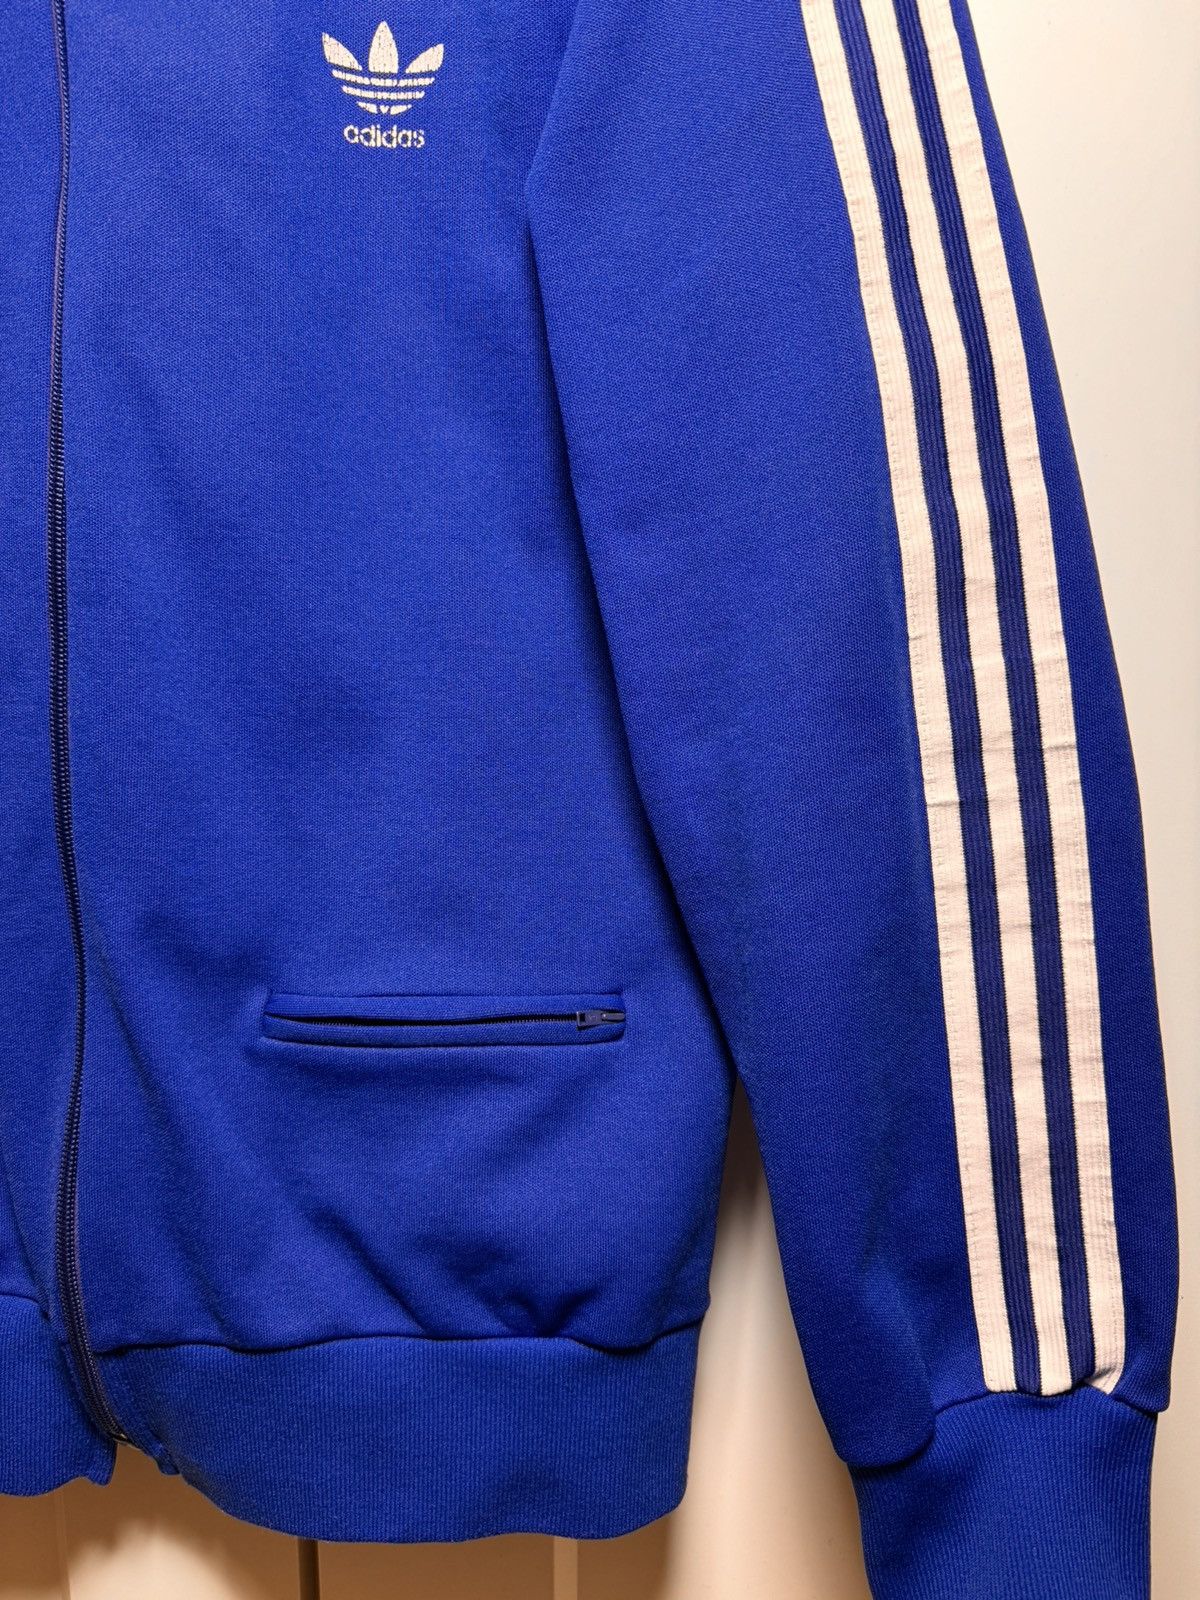 Adidas Adidas 70s Track Top Olympic Jacket Size US L / EU 52-54 / 3 - 4 Thumbnail